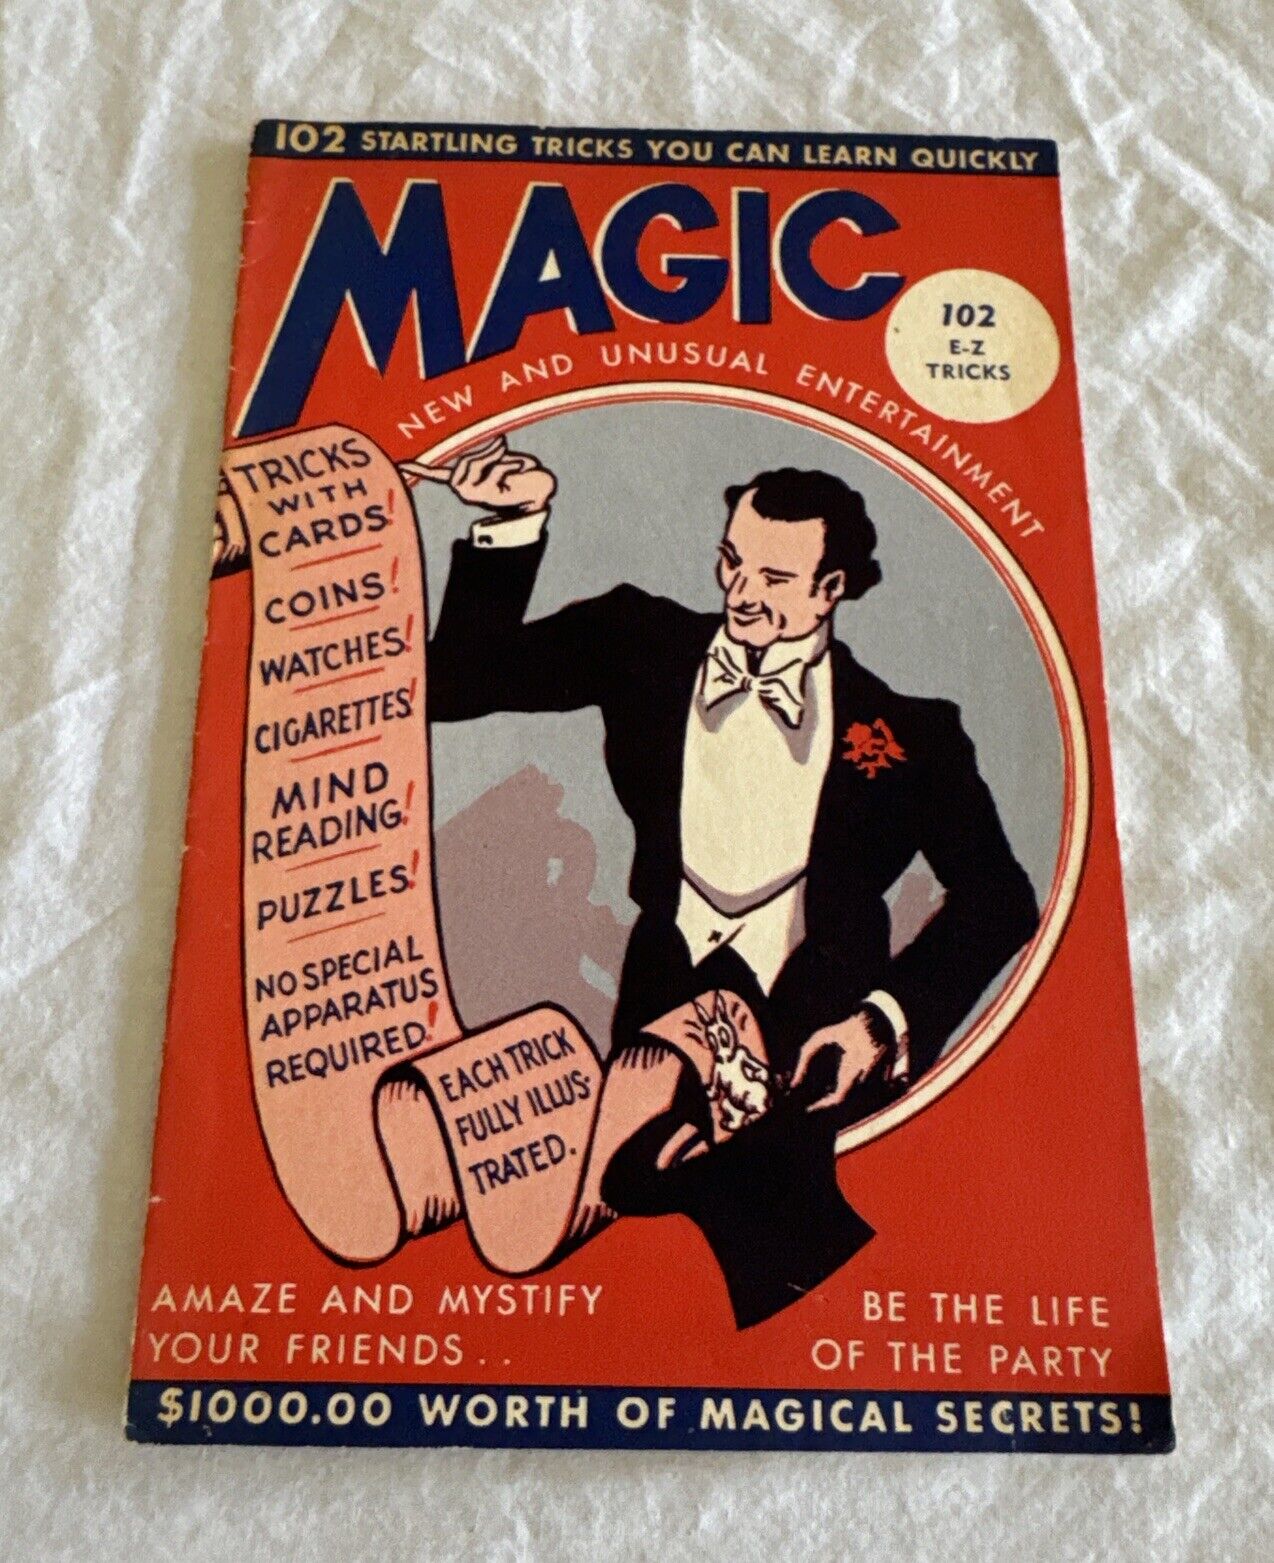 vtg 1944 Book MAGIC NEW & UNUSUAL ENTERTAINMENT 102 E-Z TRICKS Magical Secrets 